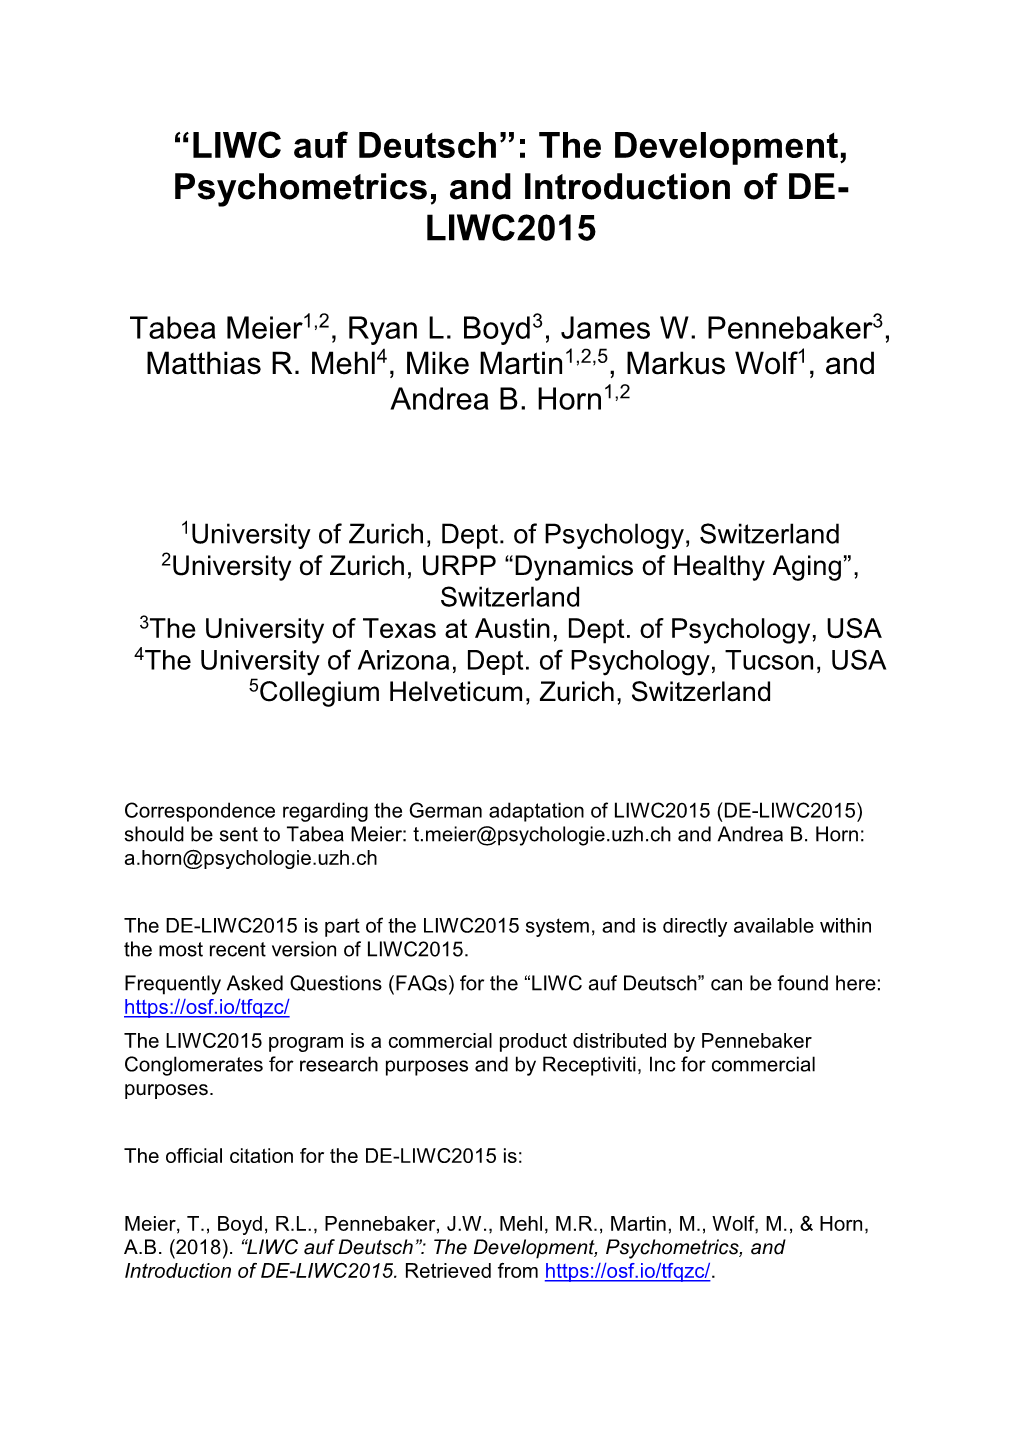 The Development, Psychometrics, and Introduction of DE- LIWC2015